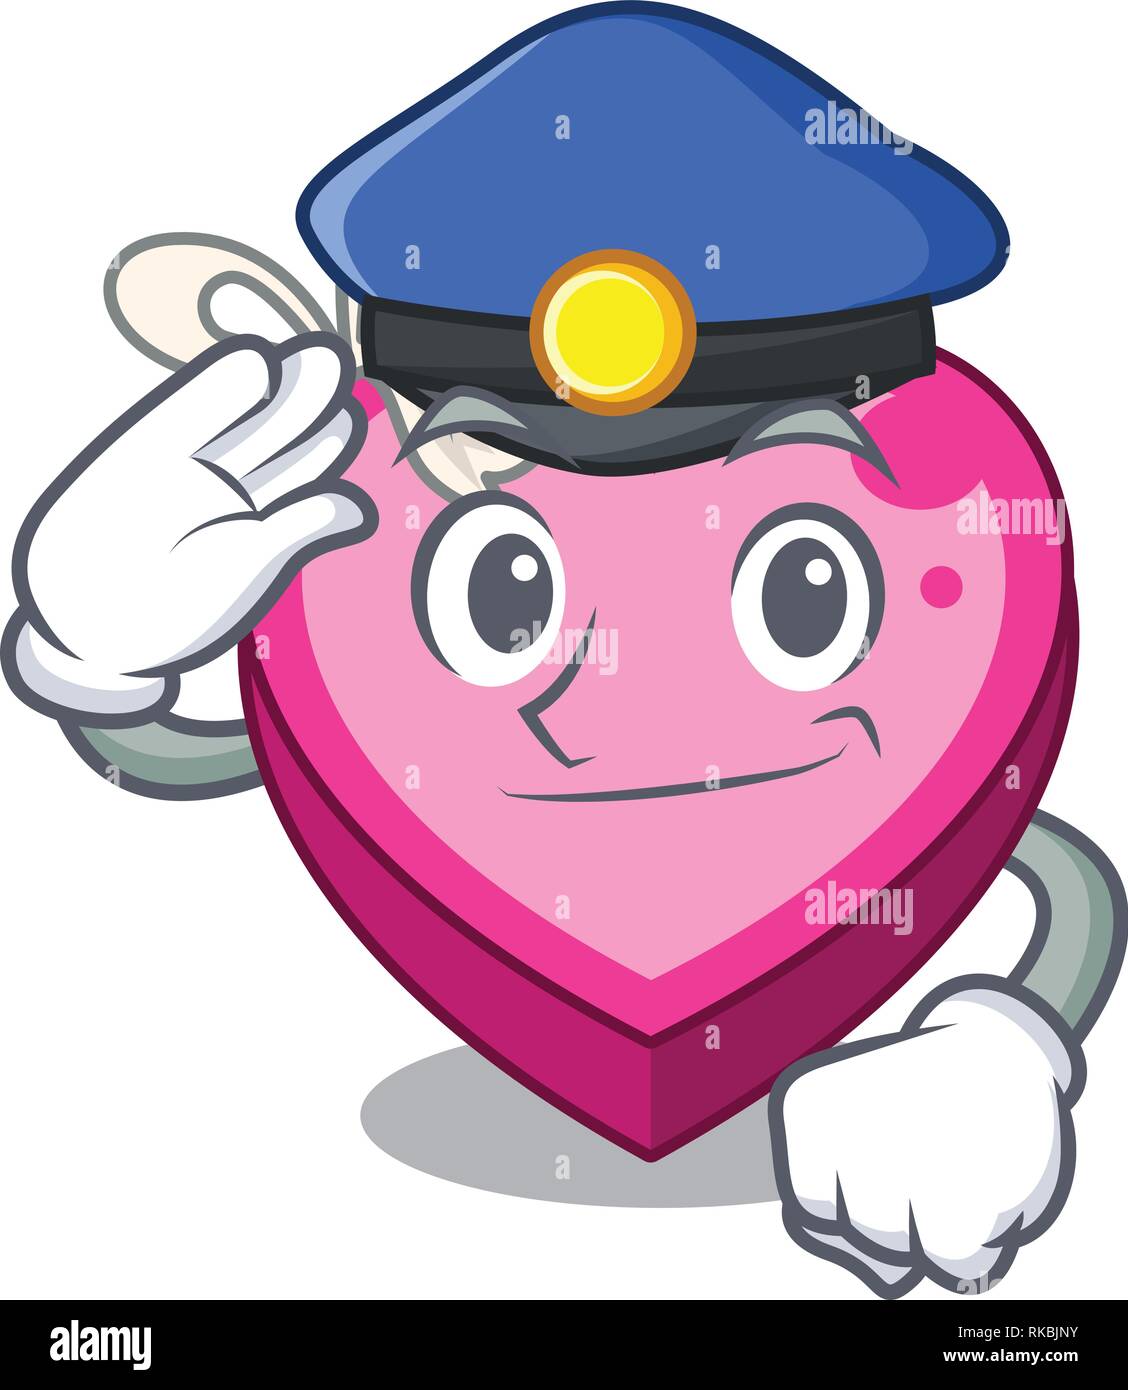 Police box heart in shape of mascot vector illustration Stock Vector